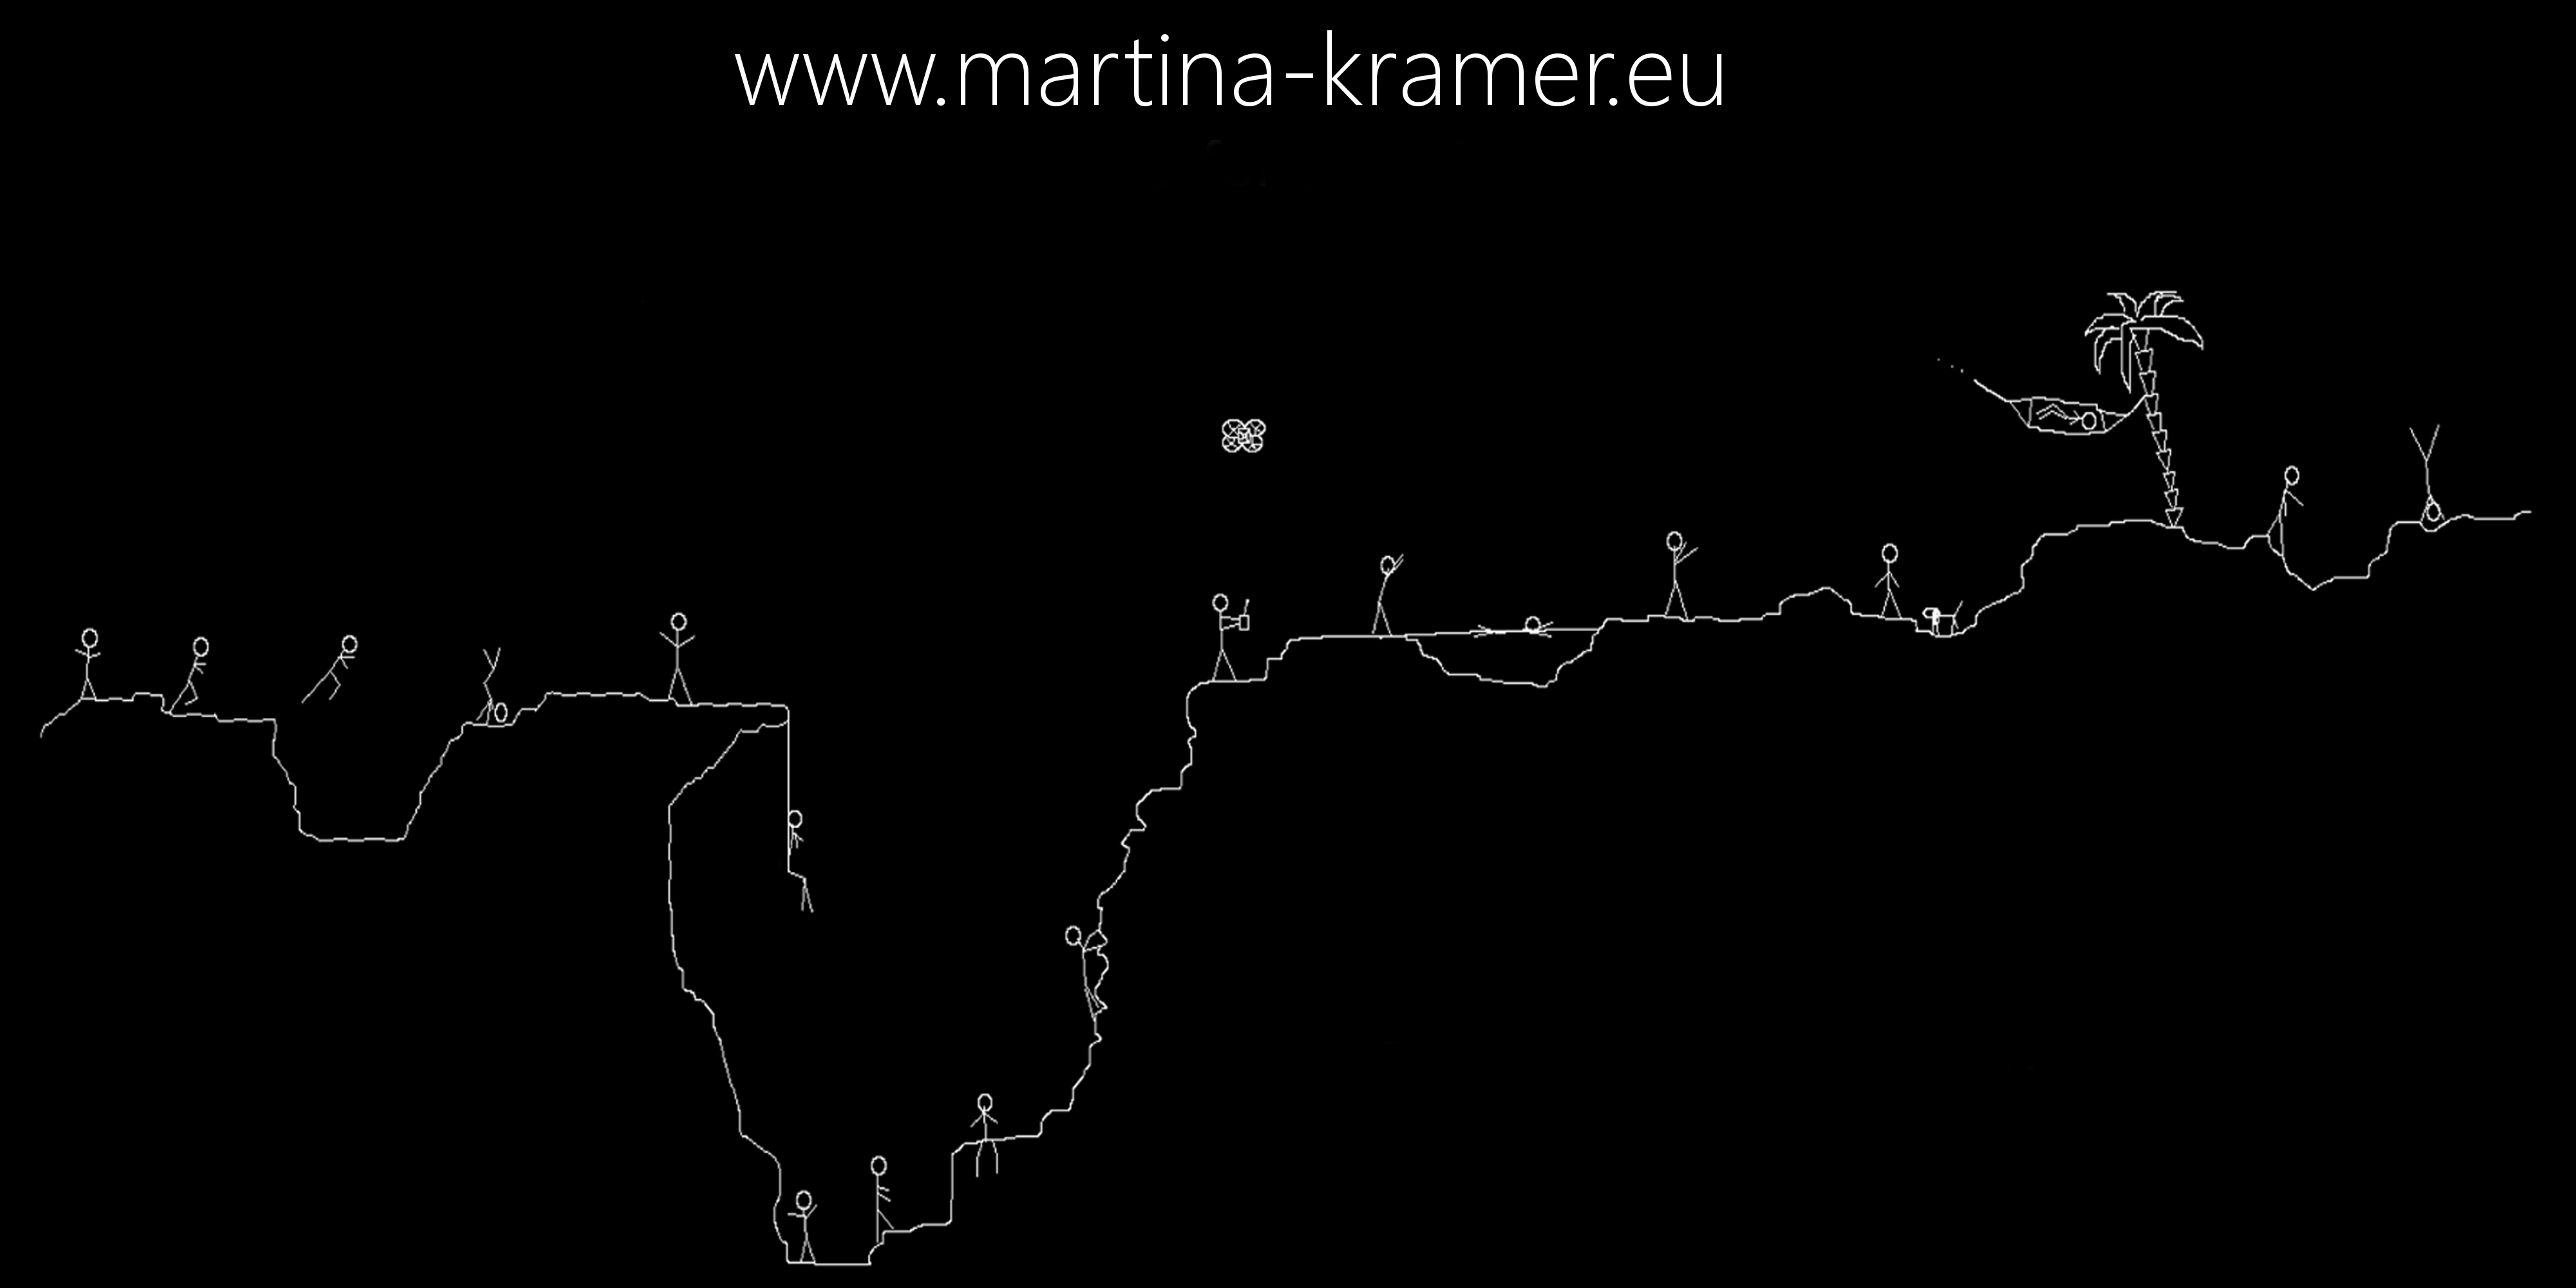 www.martina-kramer.eu